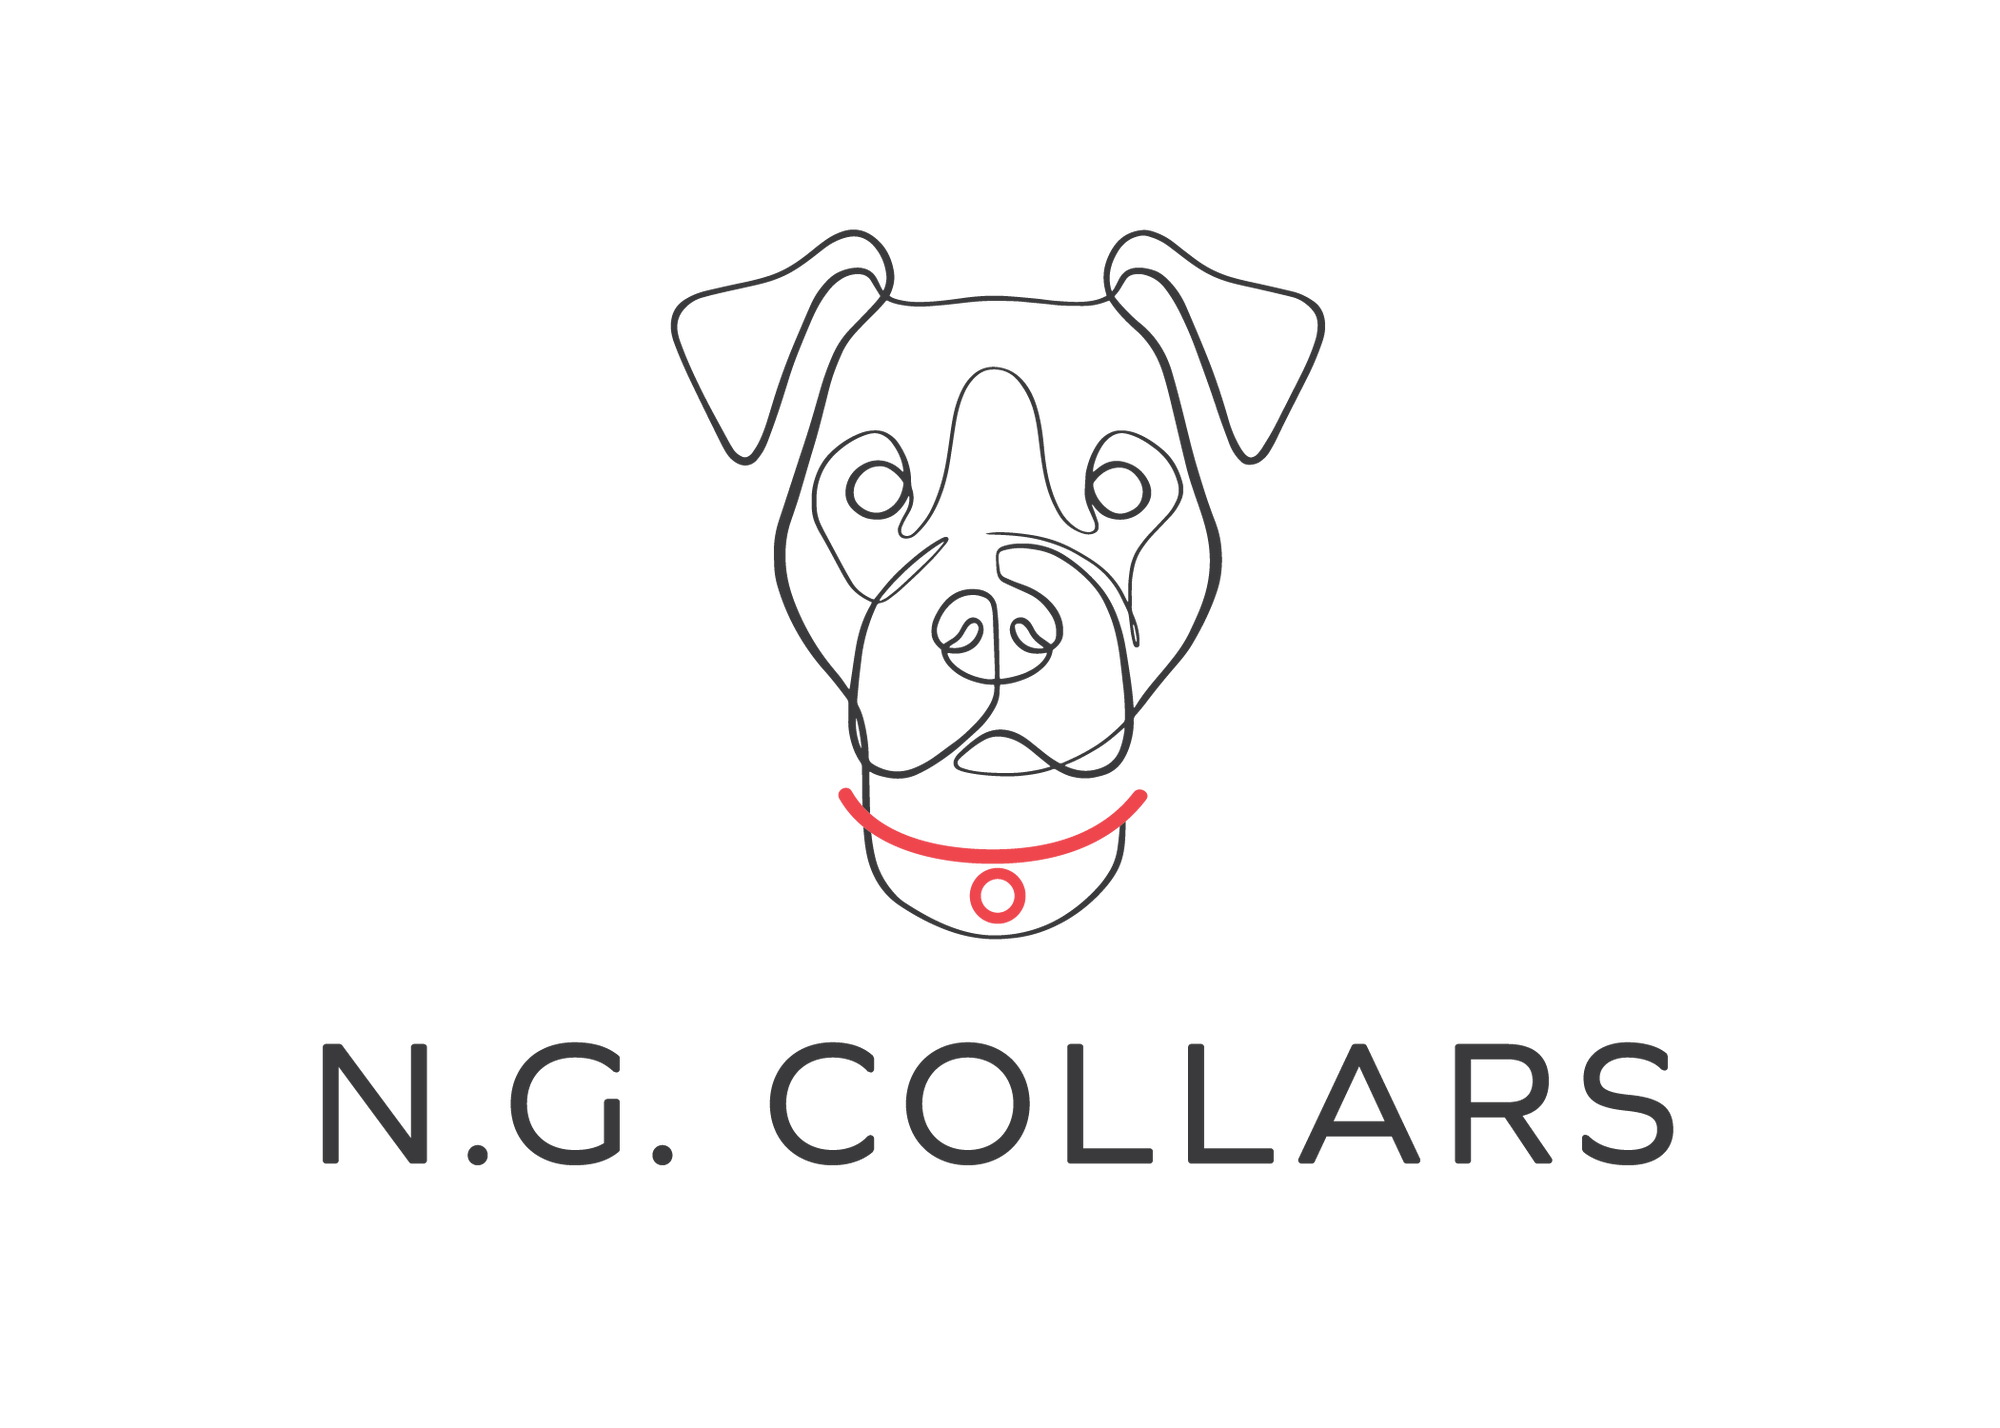 N.G. Collars